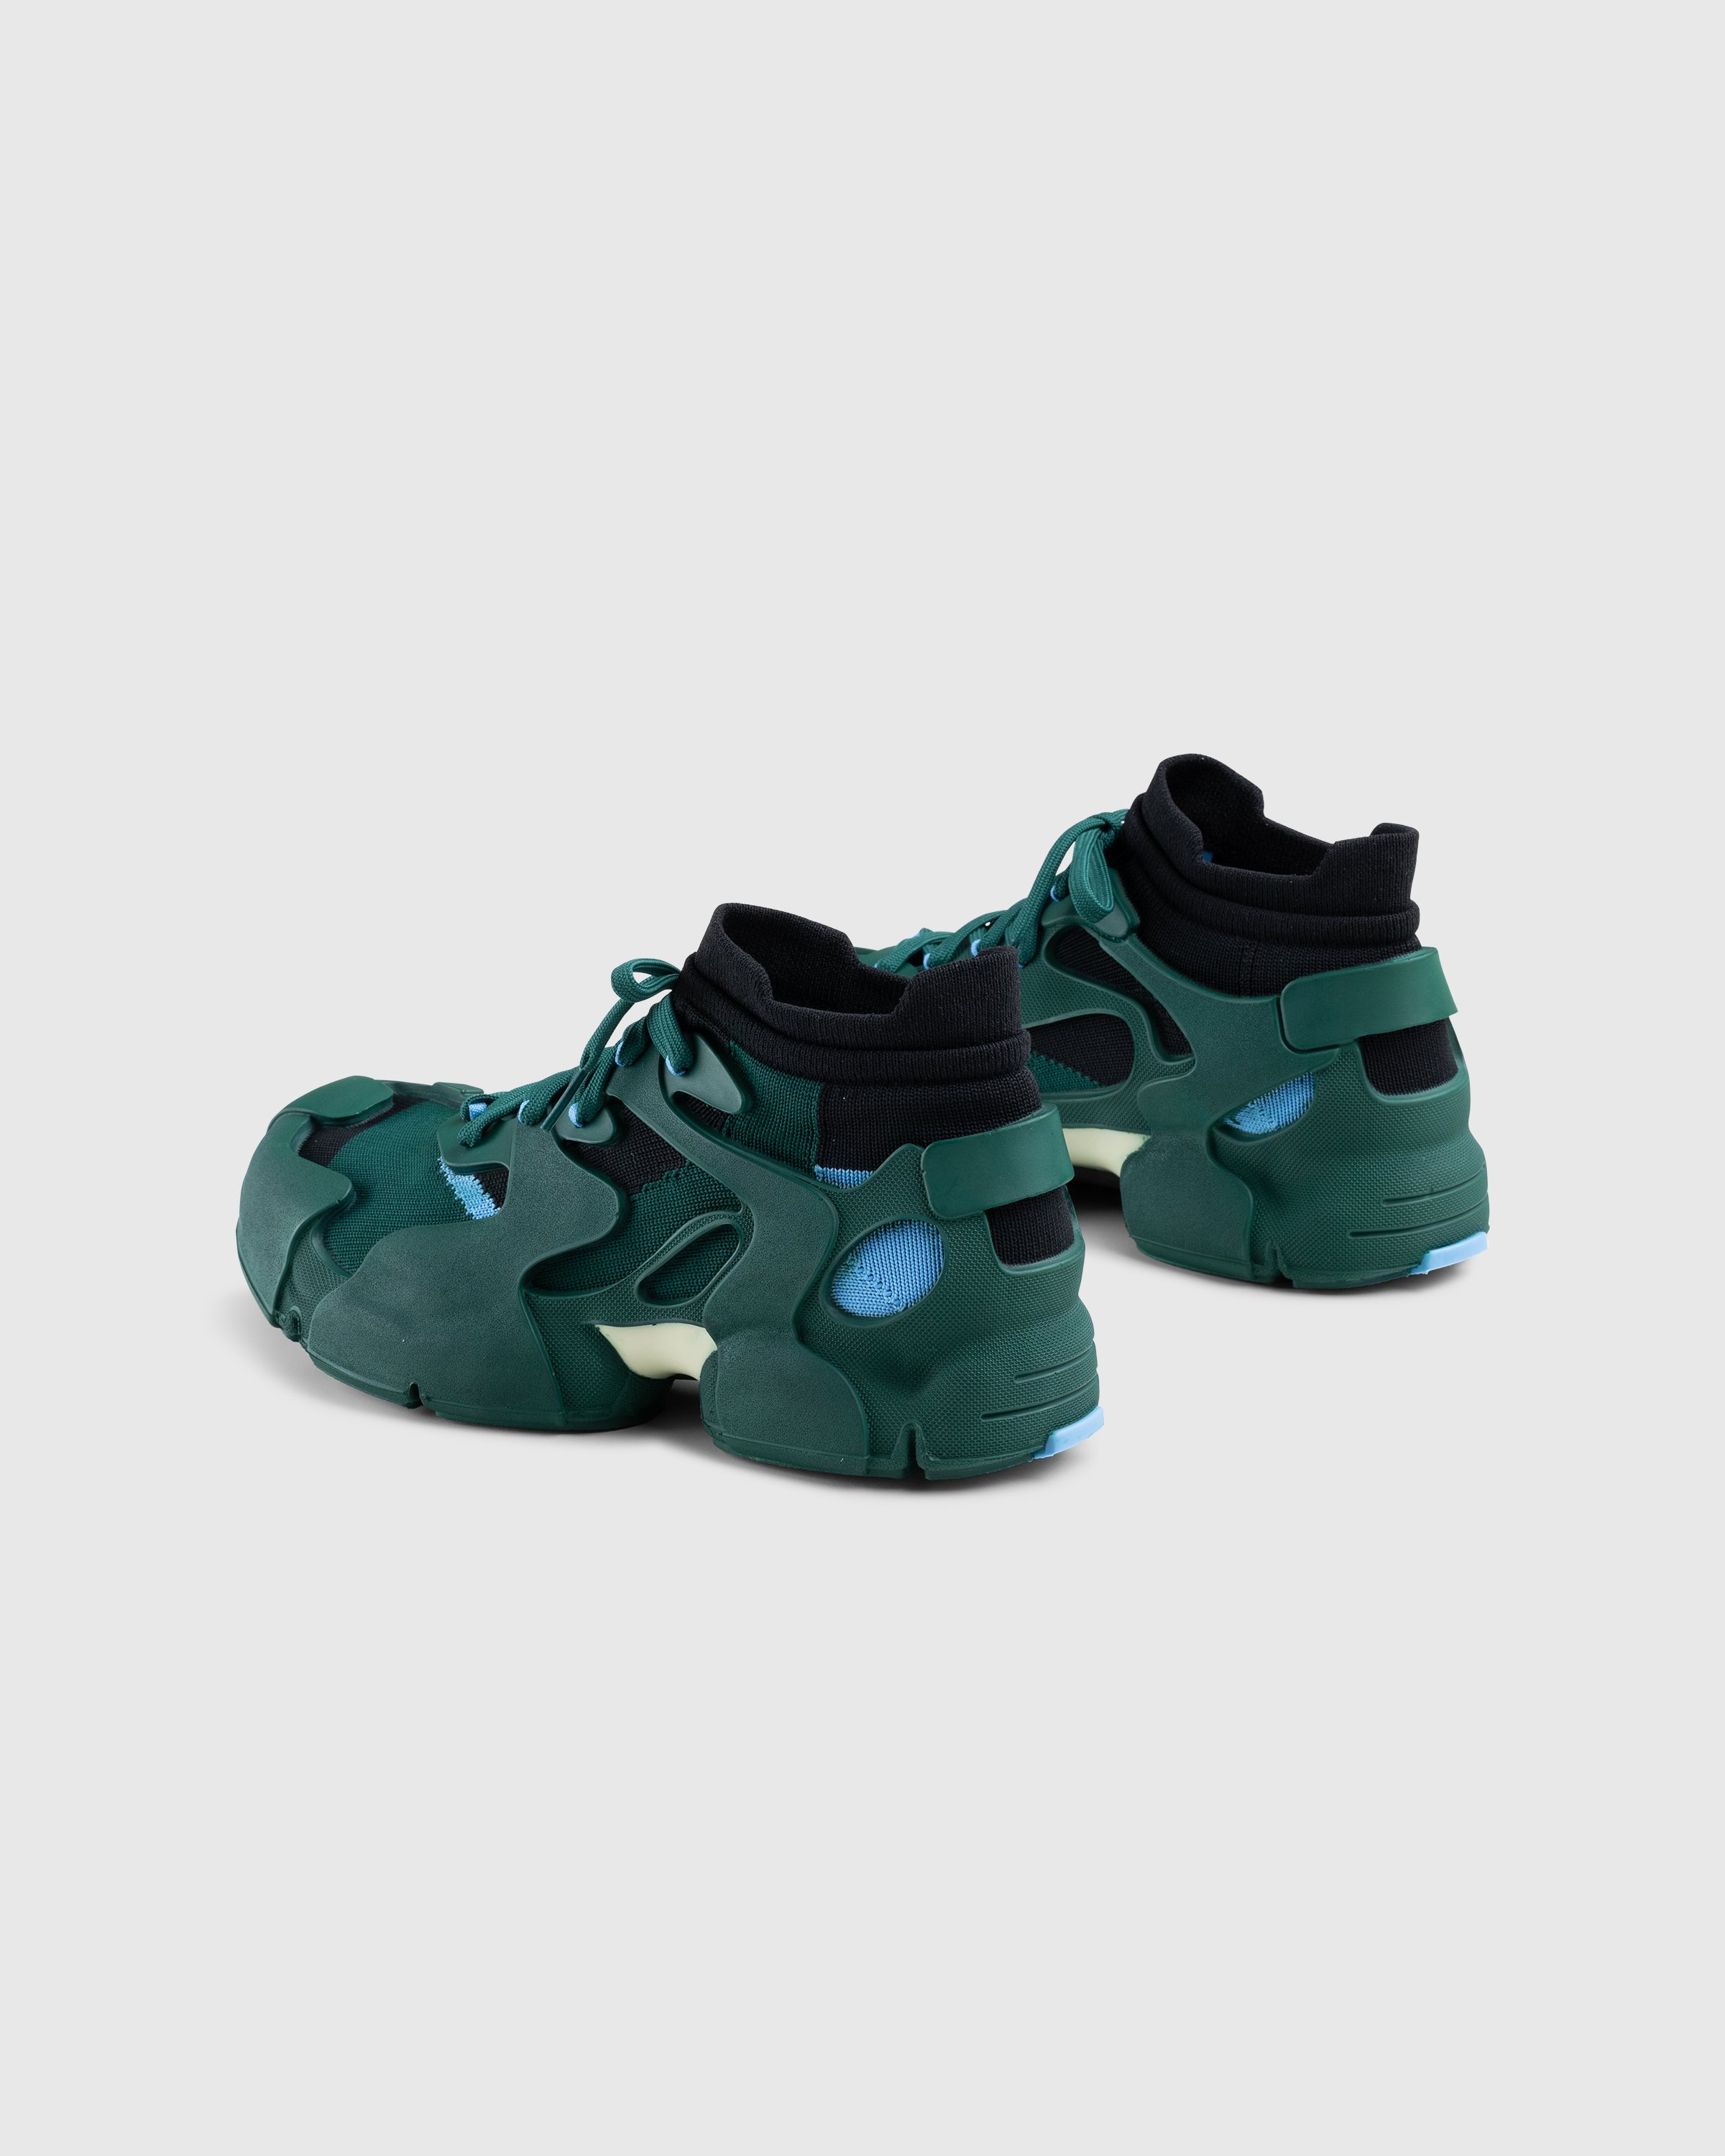 CAMPERLAB - Tossu Green - Footwear - Green - Image 4